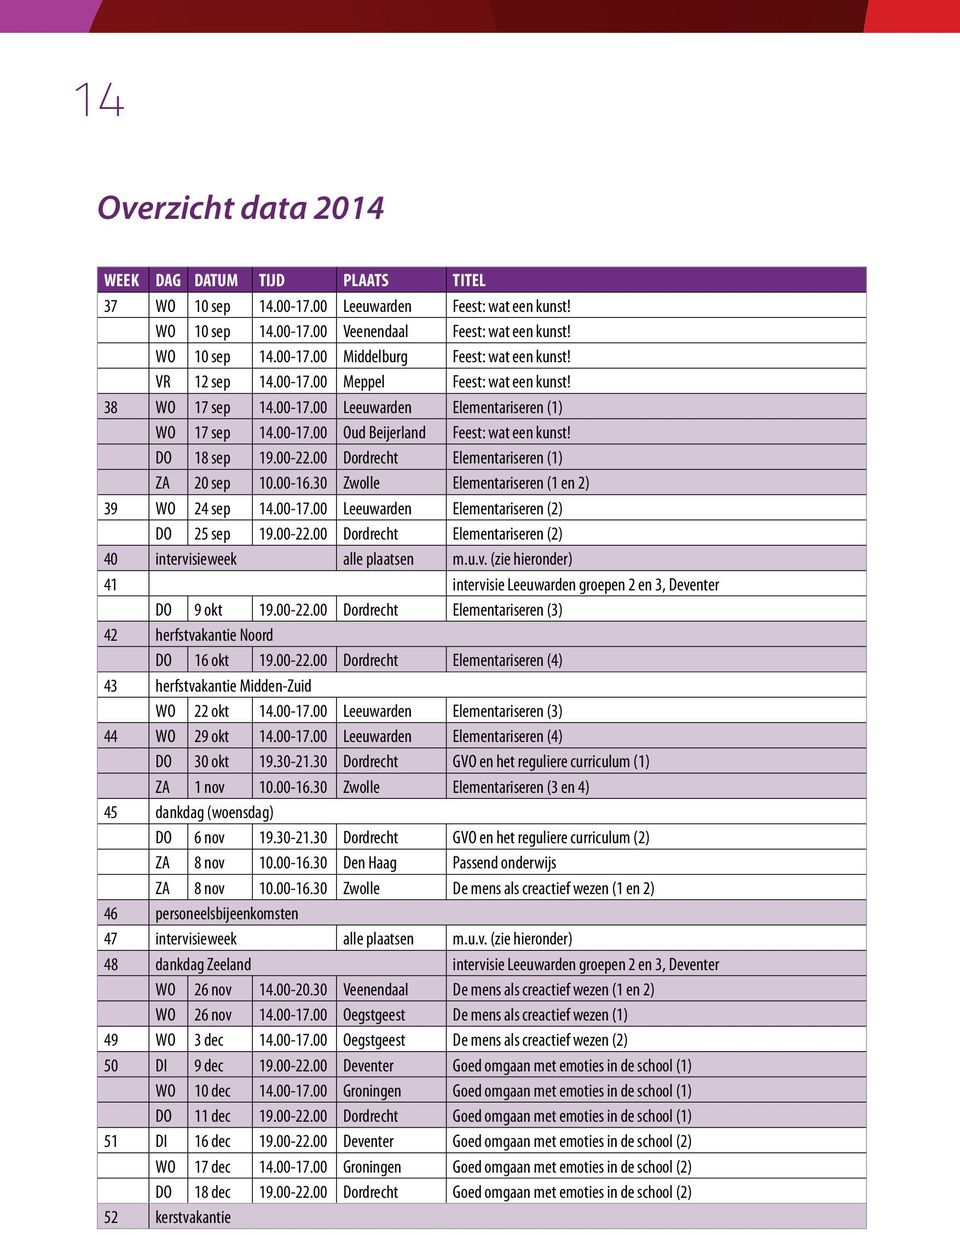 00 Dordrecht Elementariseren (1) ZA 20 sep 10.00-16.30 Zwolle Elementariseren (1 en 2) 39 WO 24 sep 14.00-17.00 Leeuwarden Elementariseren (2) DO 25 sep 19.00-22.